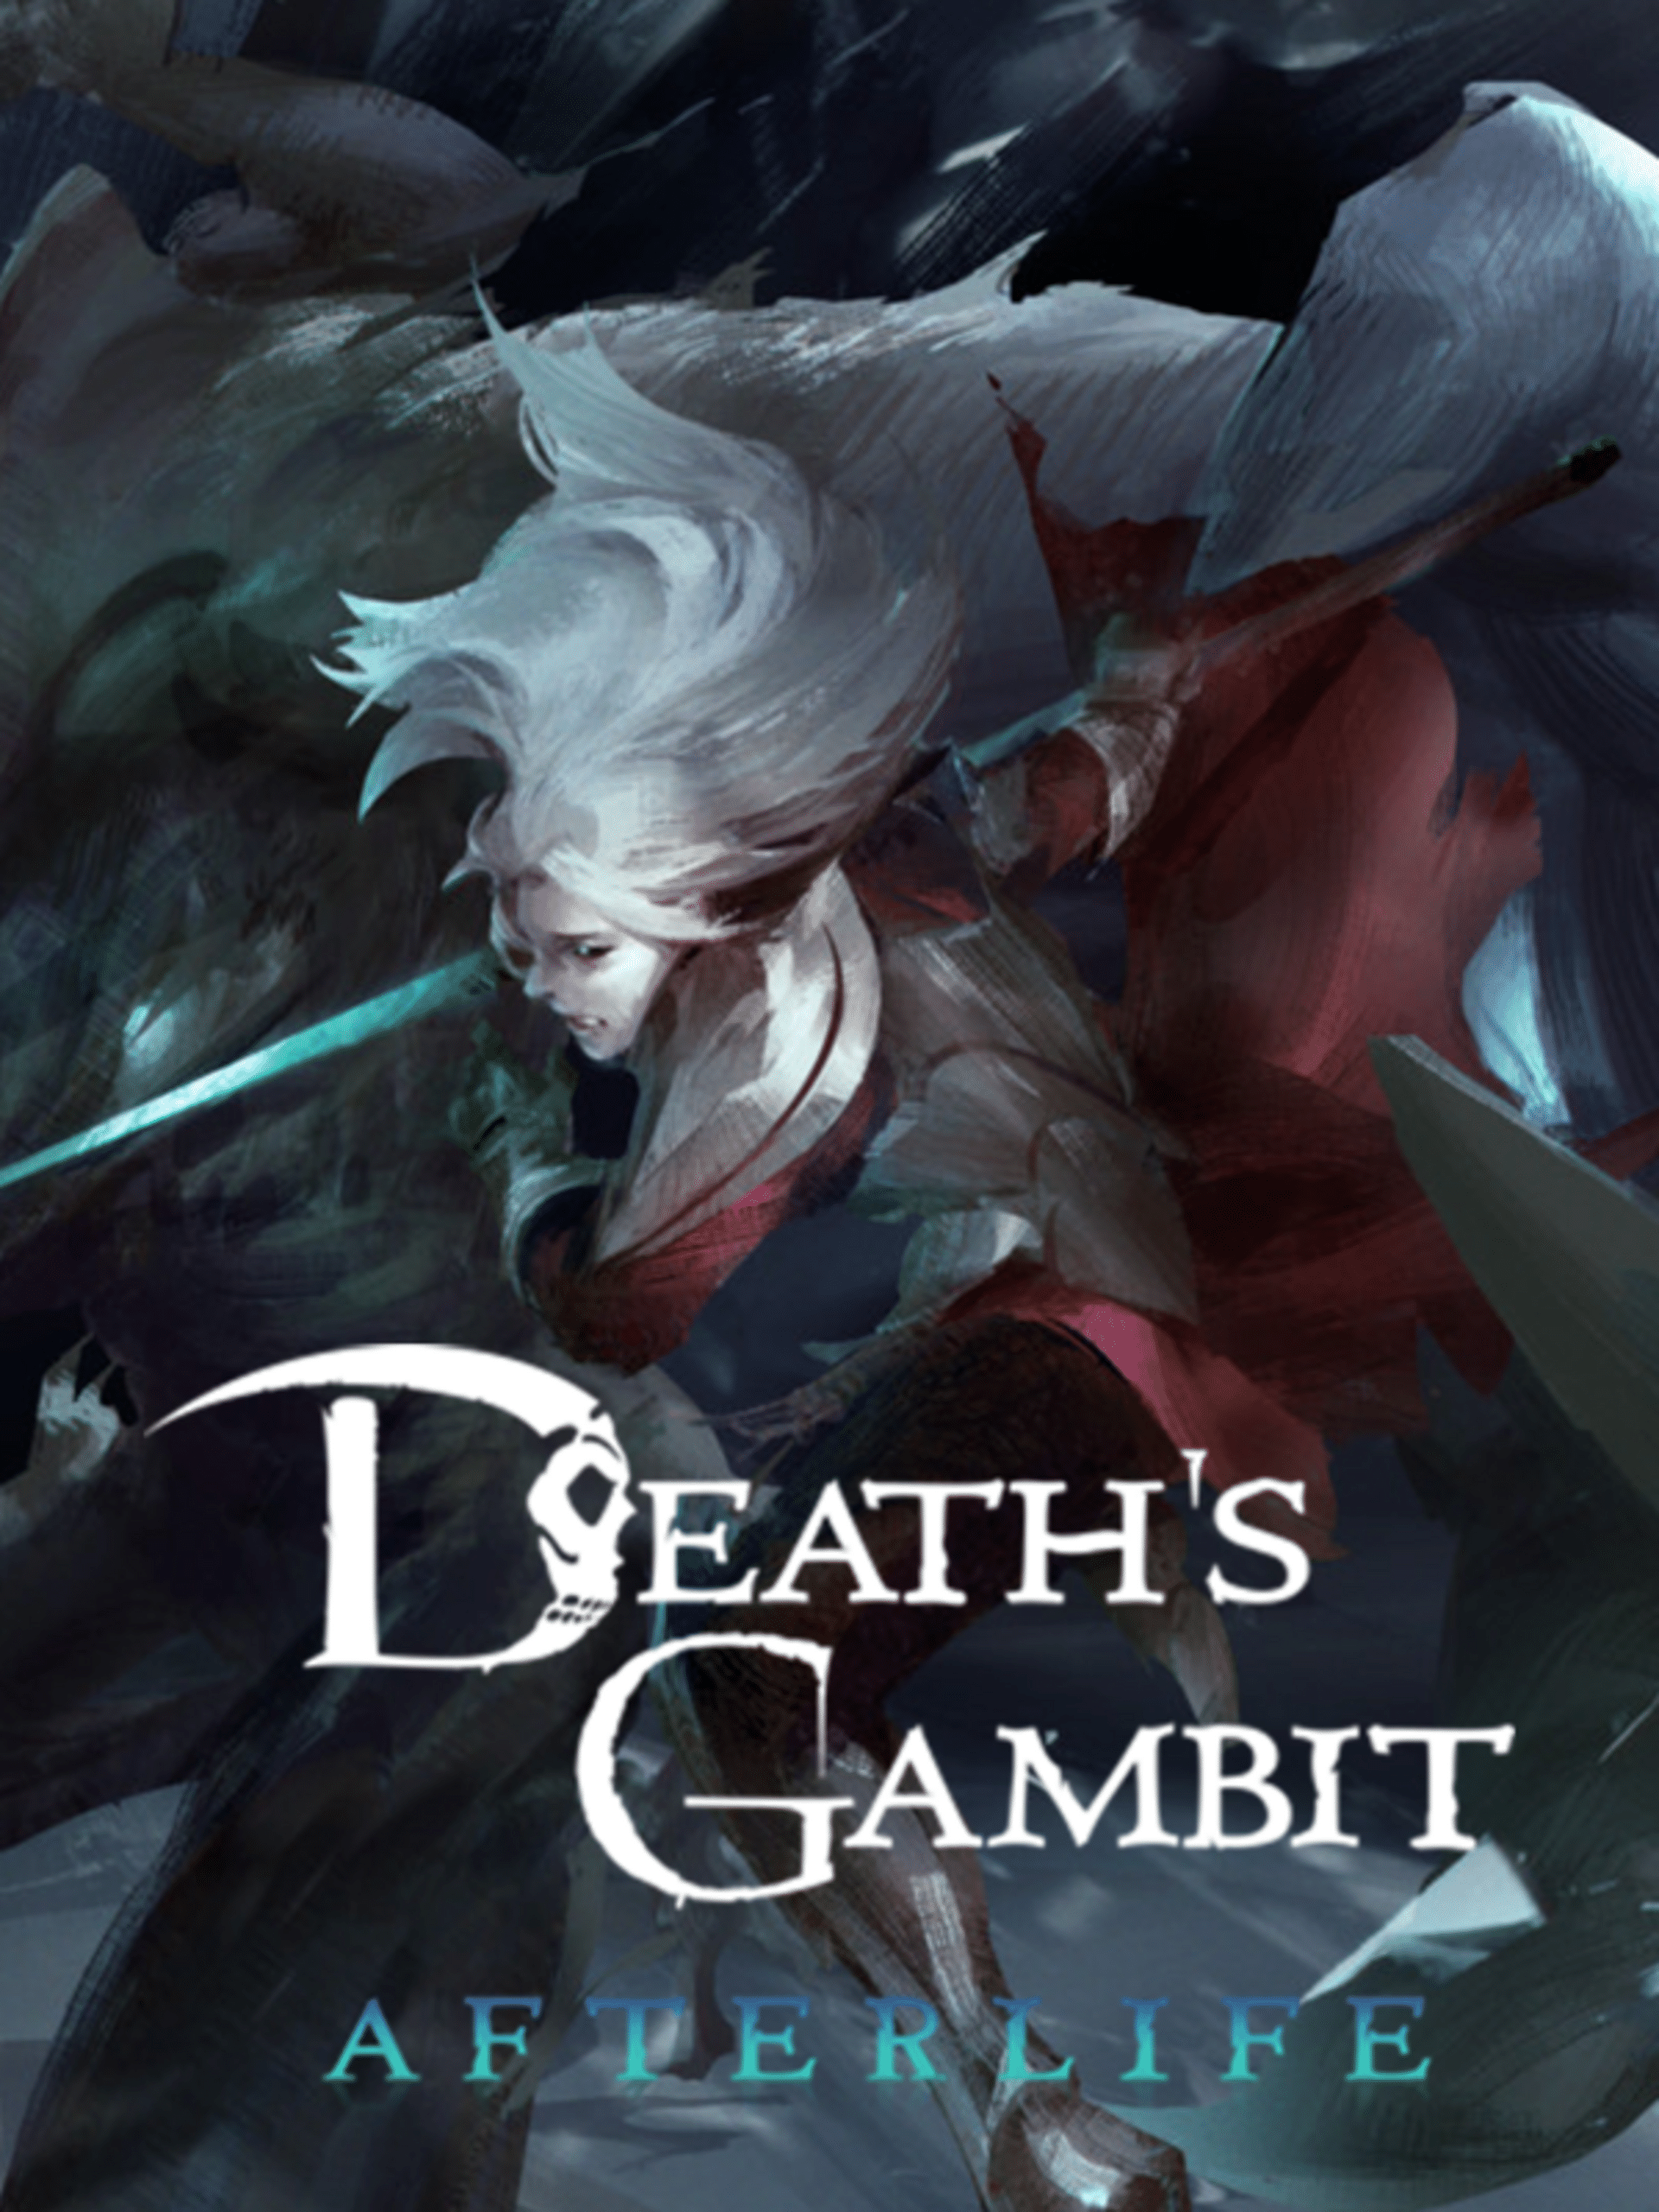 Buy Death's Gambit: Afterlife - Microsoft Store en-IS